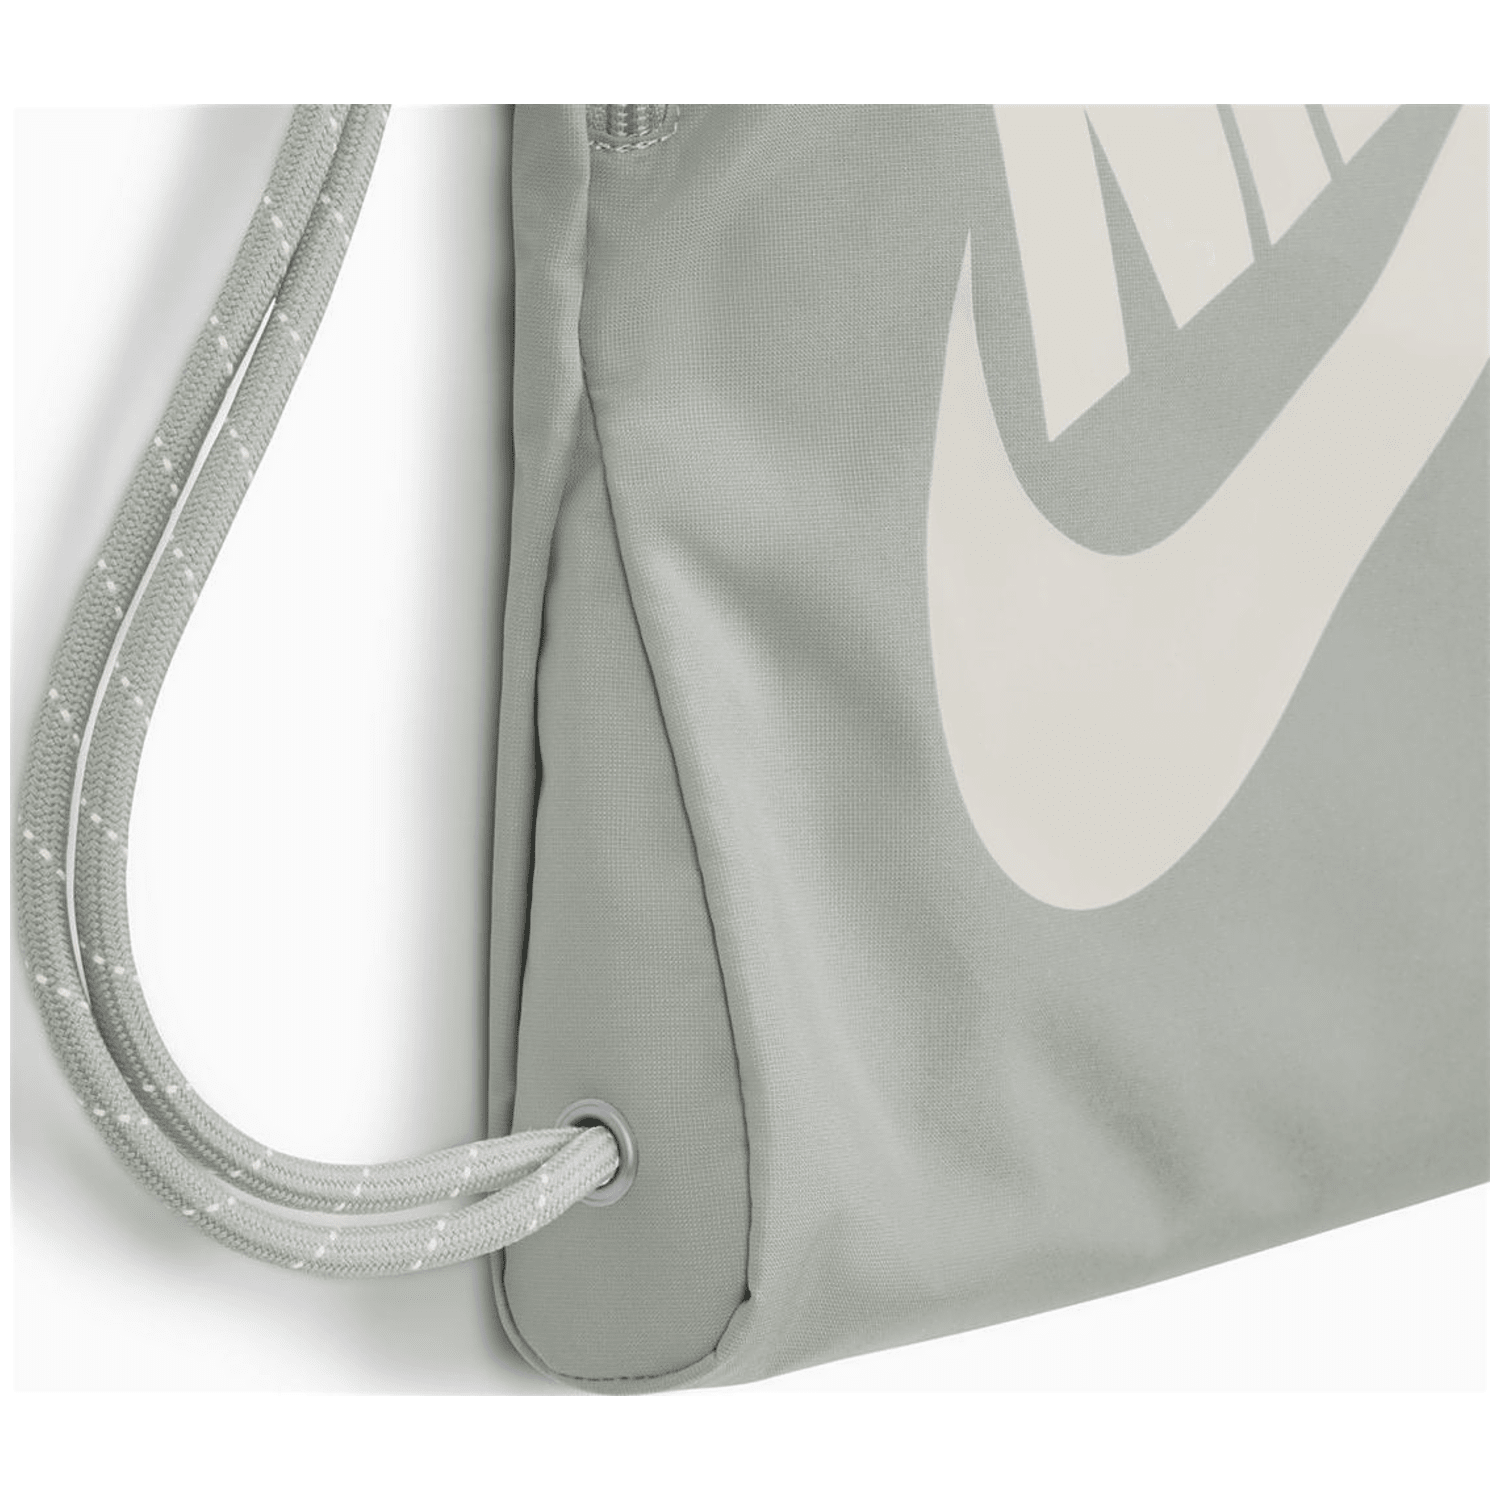 Nike Heritage Drawstring Unisex Beutel / Kleintasche